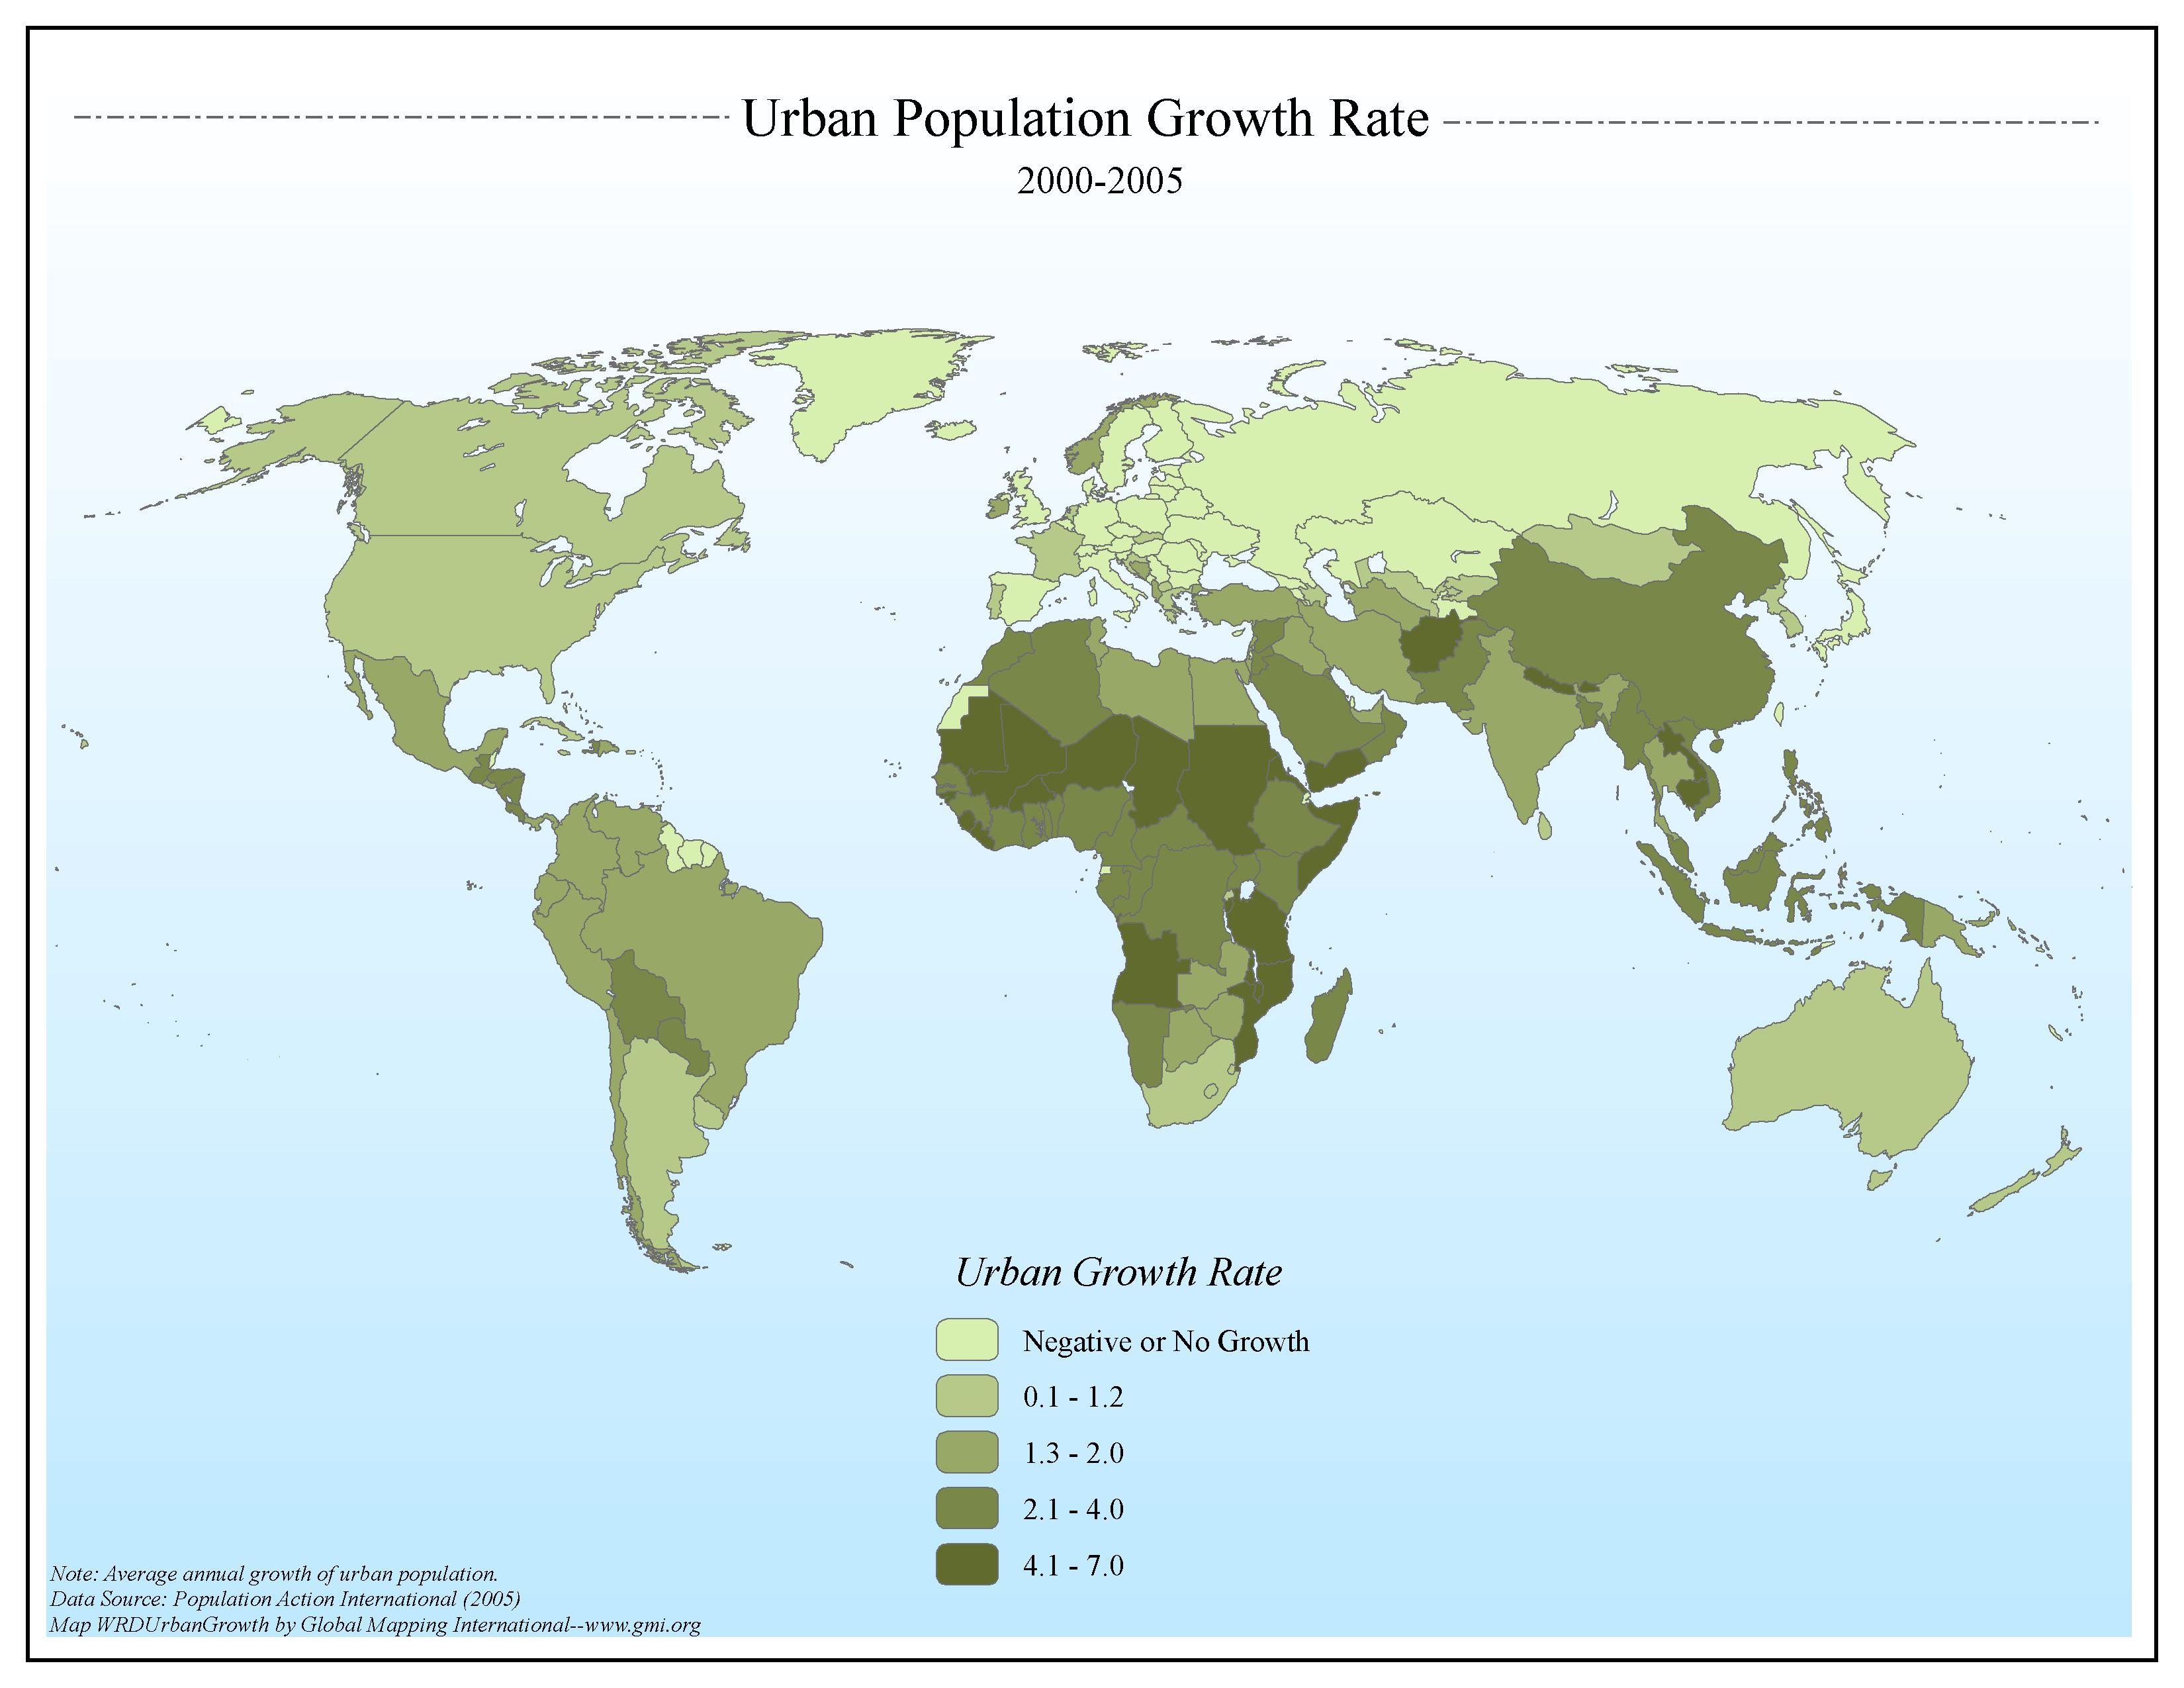 Urban Population Growth Rate 2000-2005